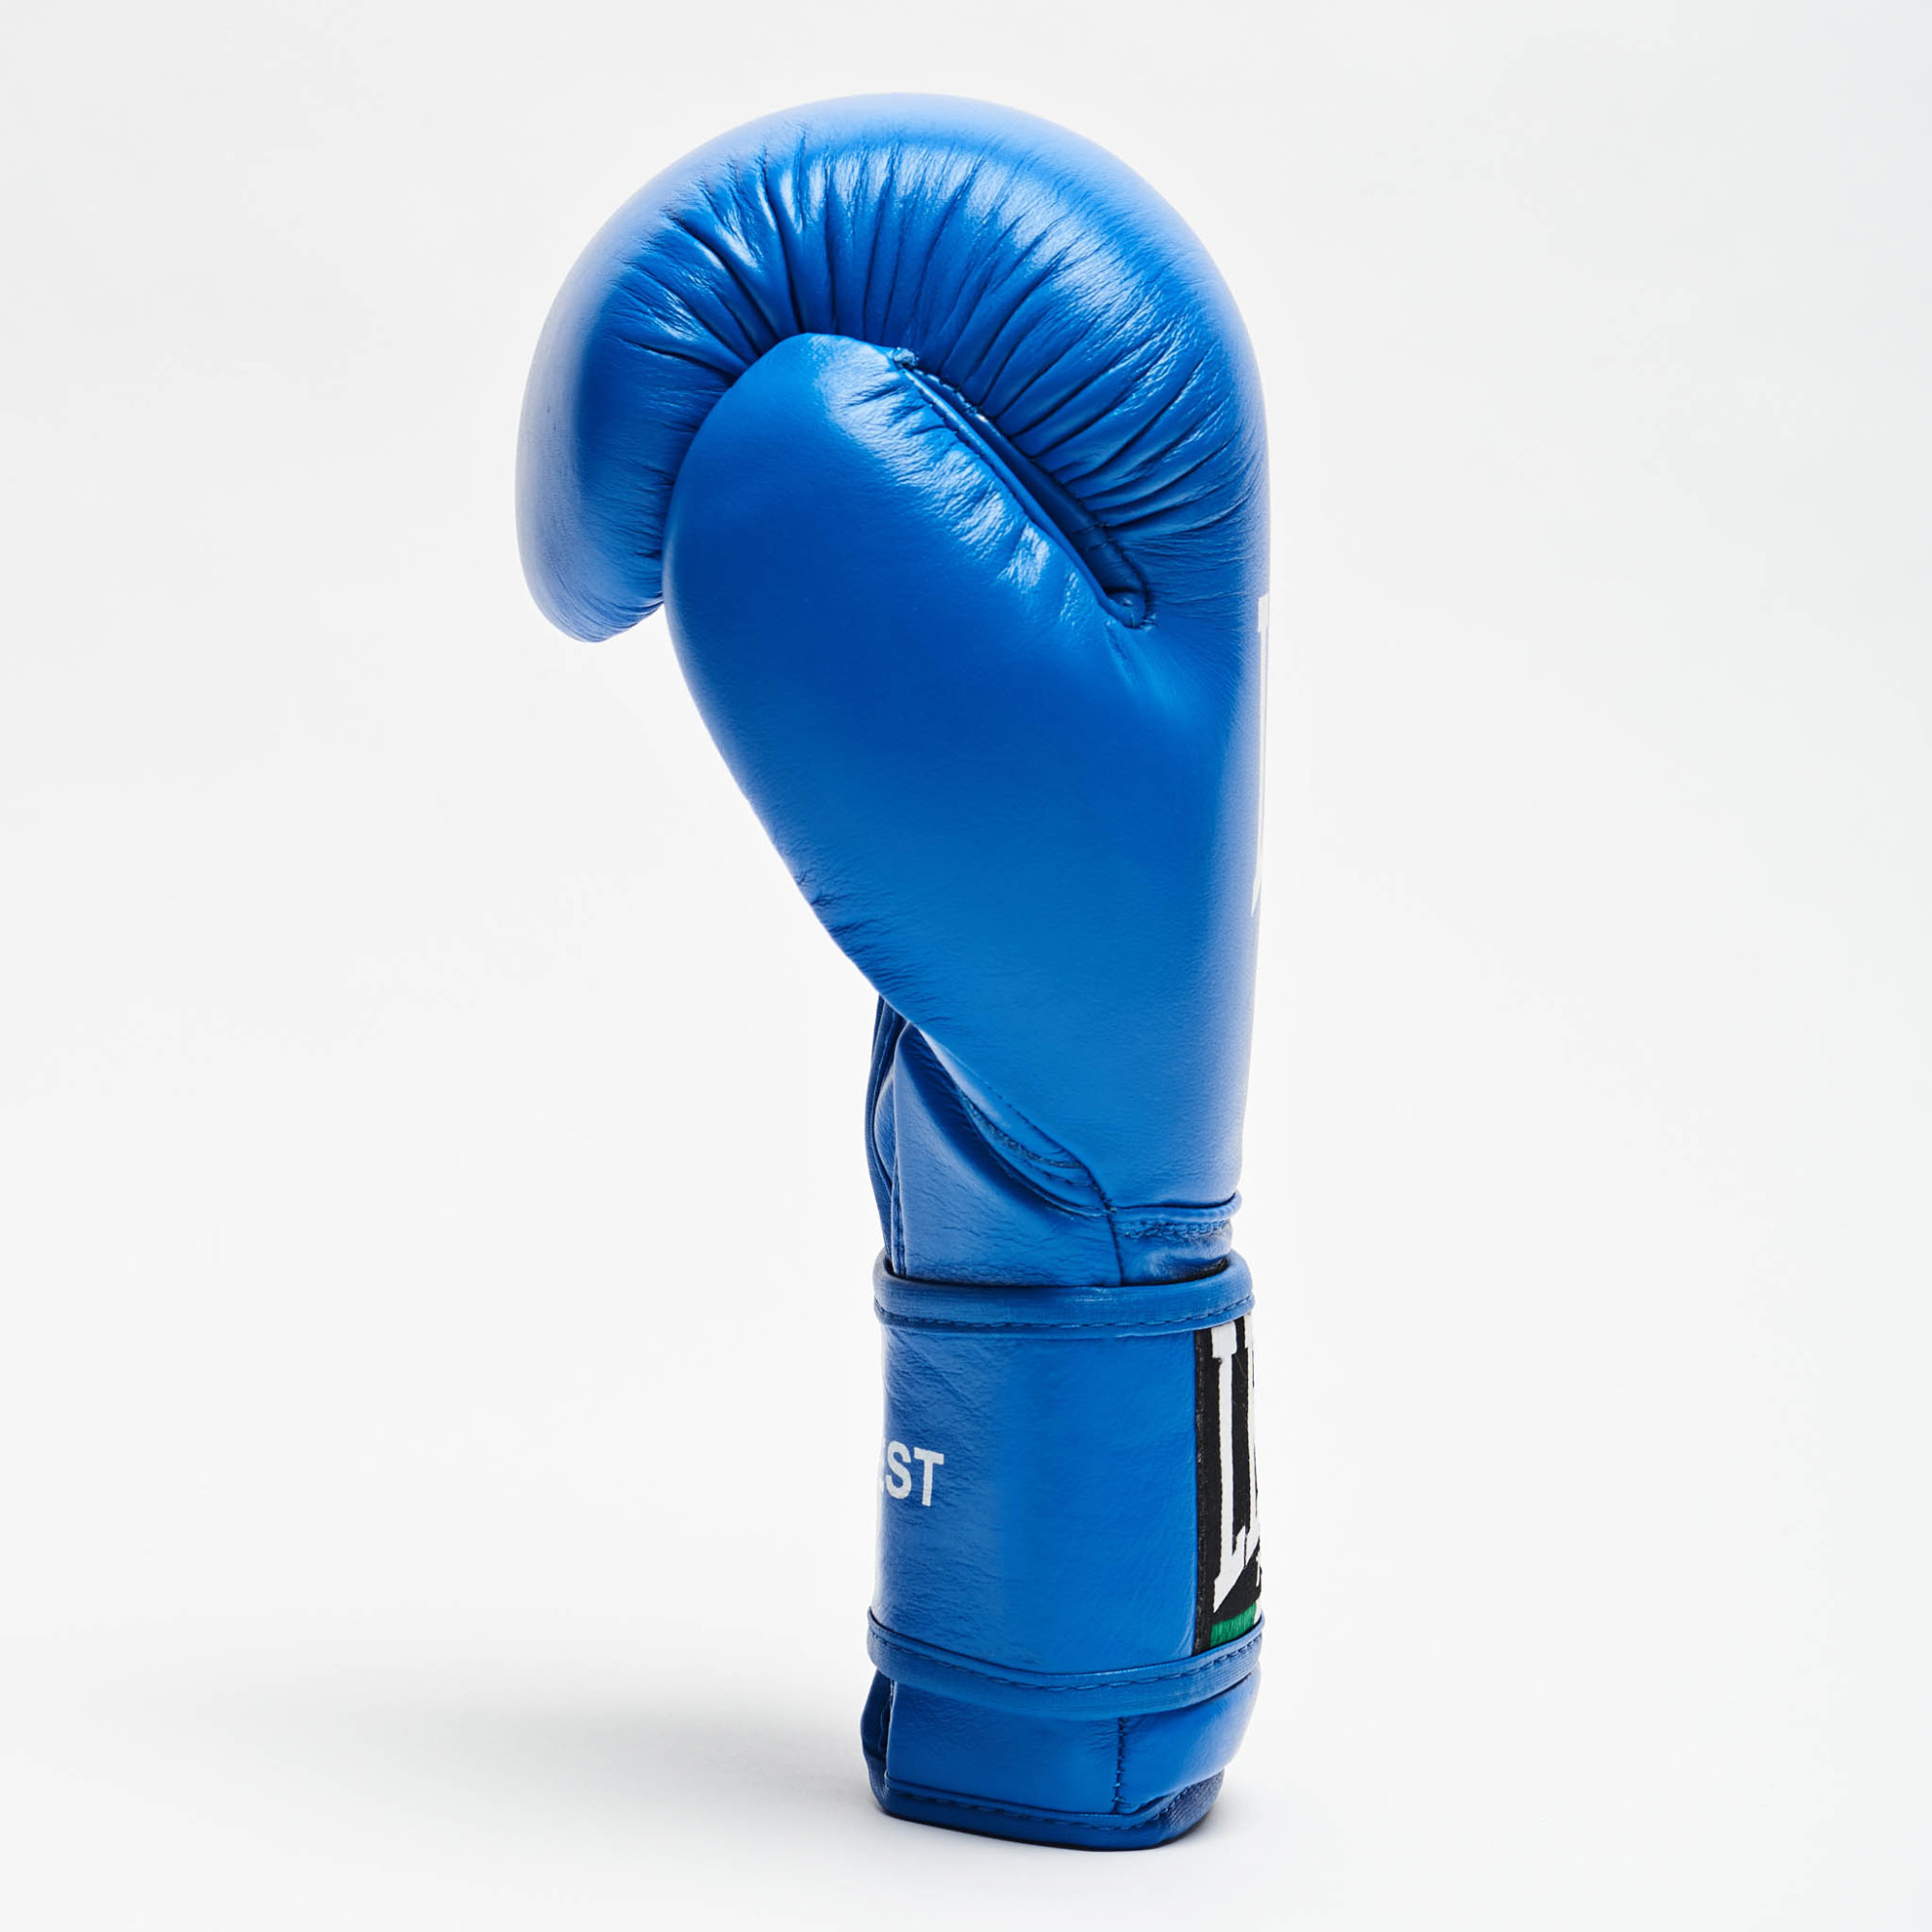 Leone 1947 Unisex's Leone1947 Gloves Flash-Blue-10oz Boxing Equipment,  Blue, 10oz, Fight Gloves -  Canada